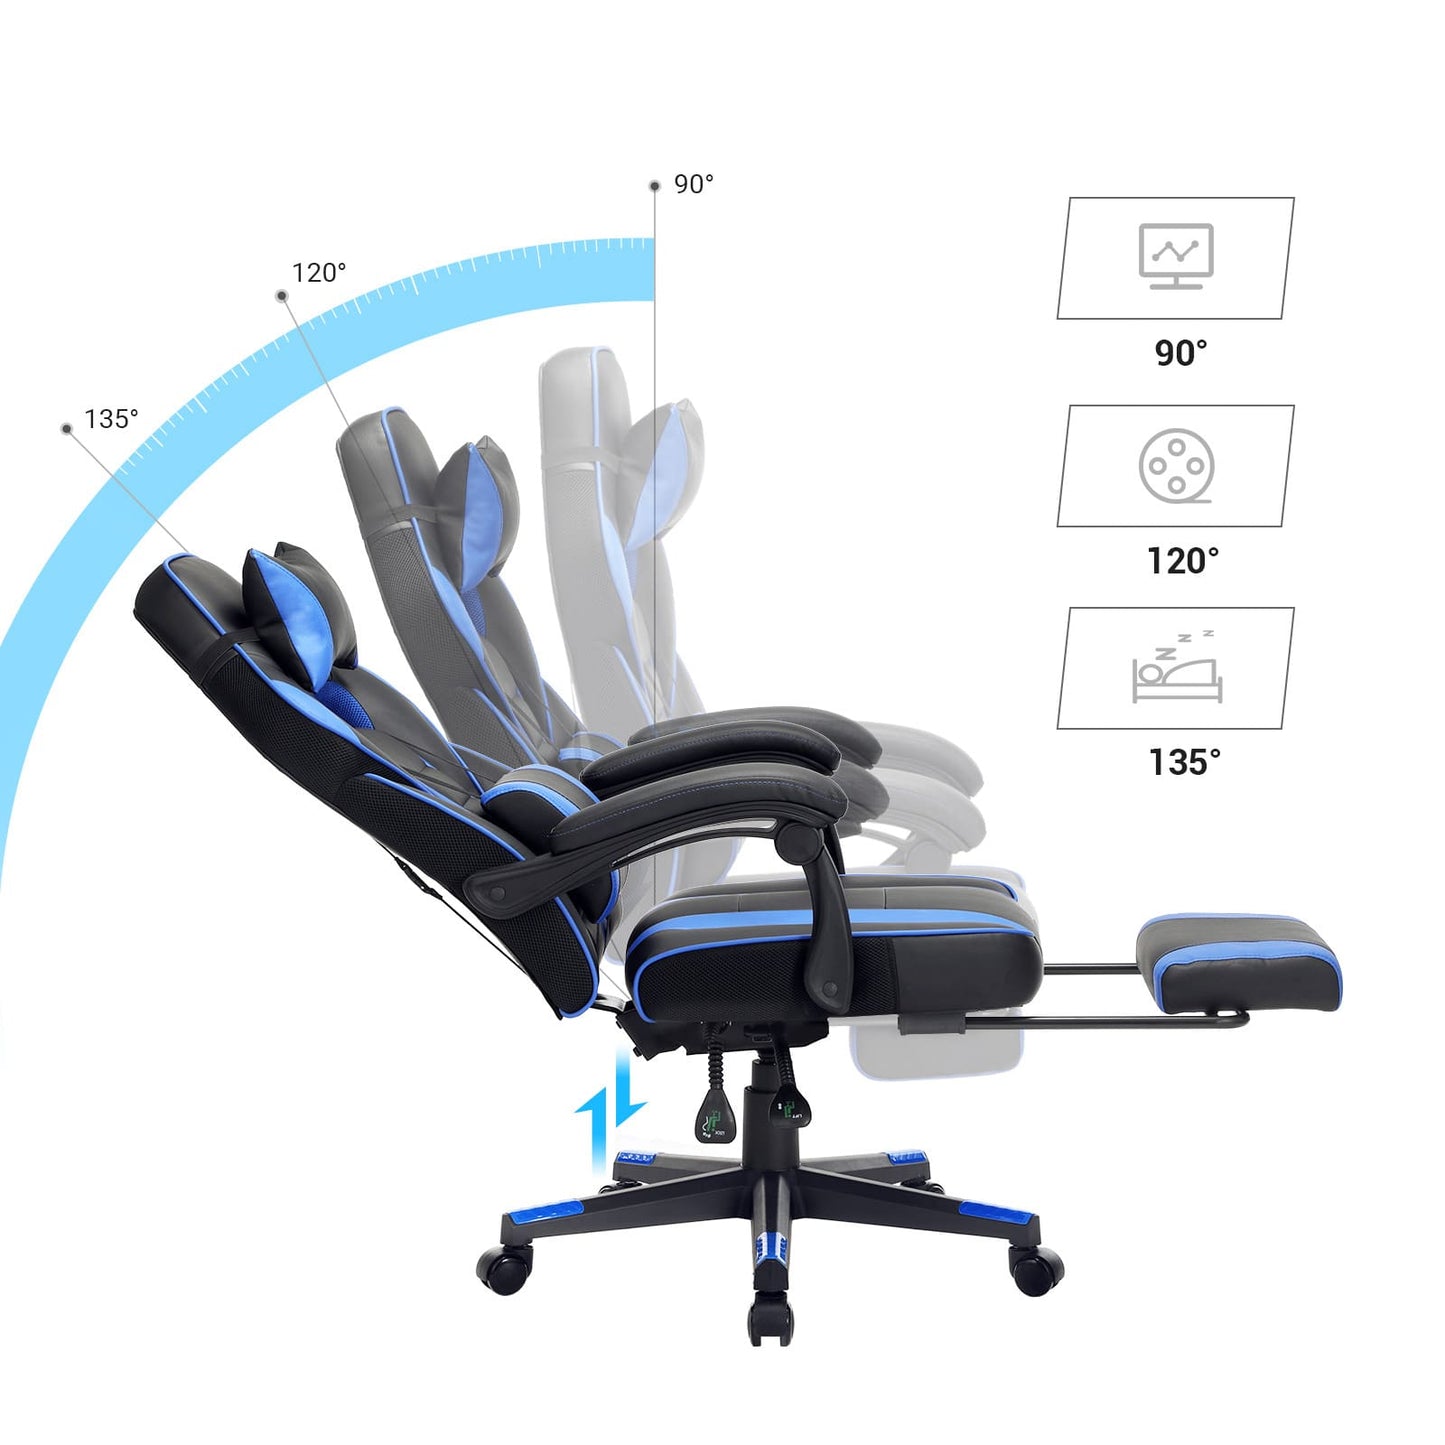 SONGMICS - Silla de juego, silla de oficina con reposacabezas y cojín lumbar, ajustable en altura, cargable hasta 150 kg